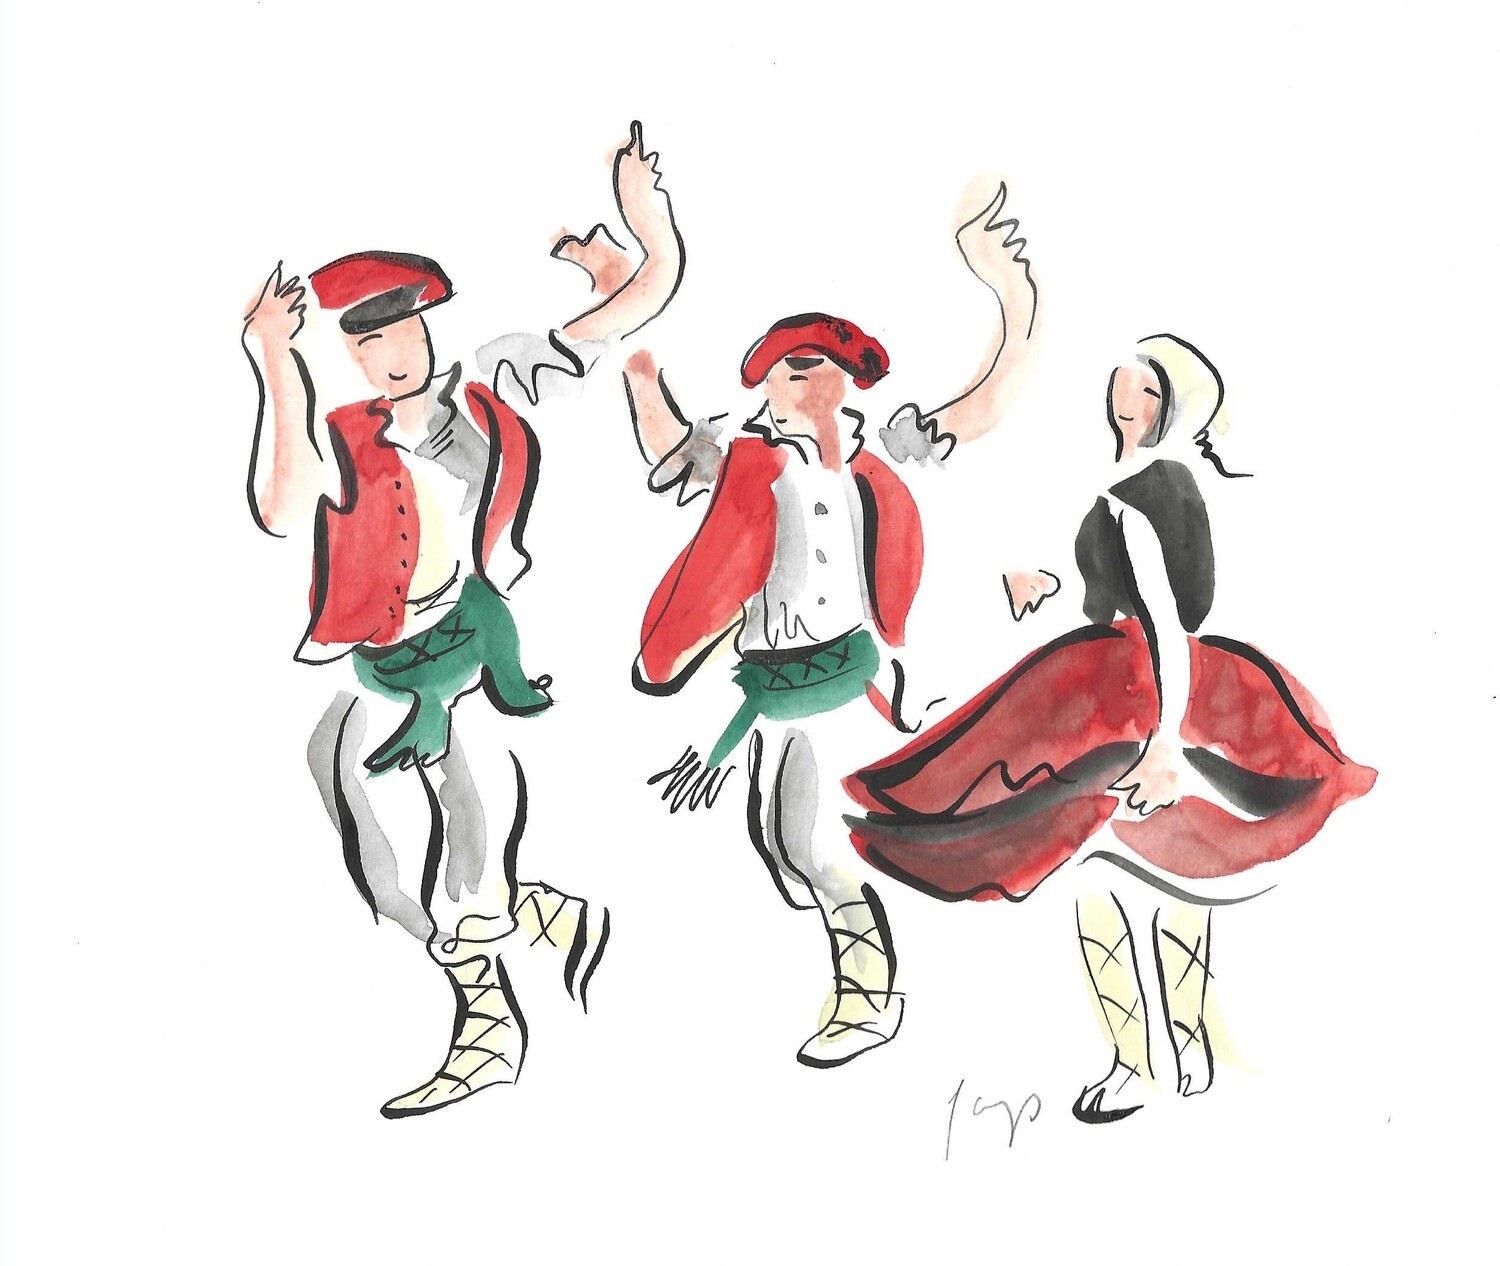 Danse basque / Basque Dance